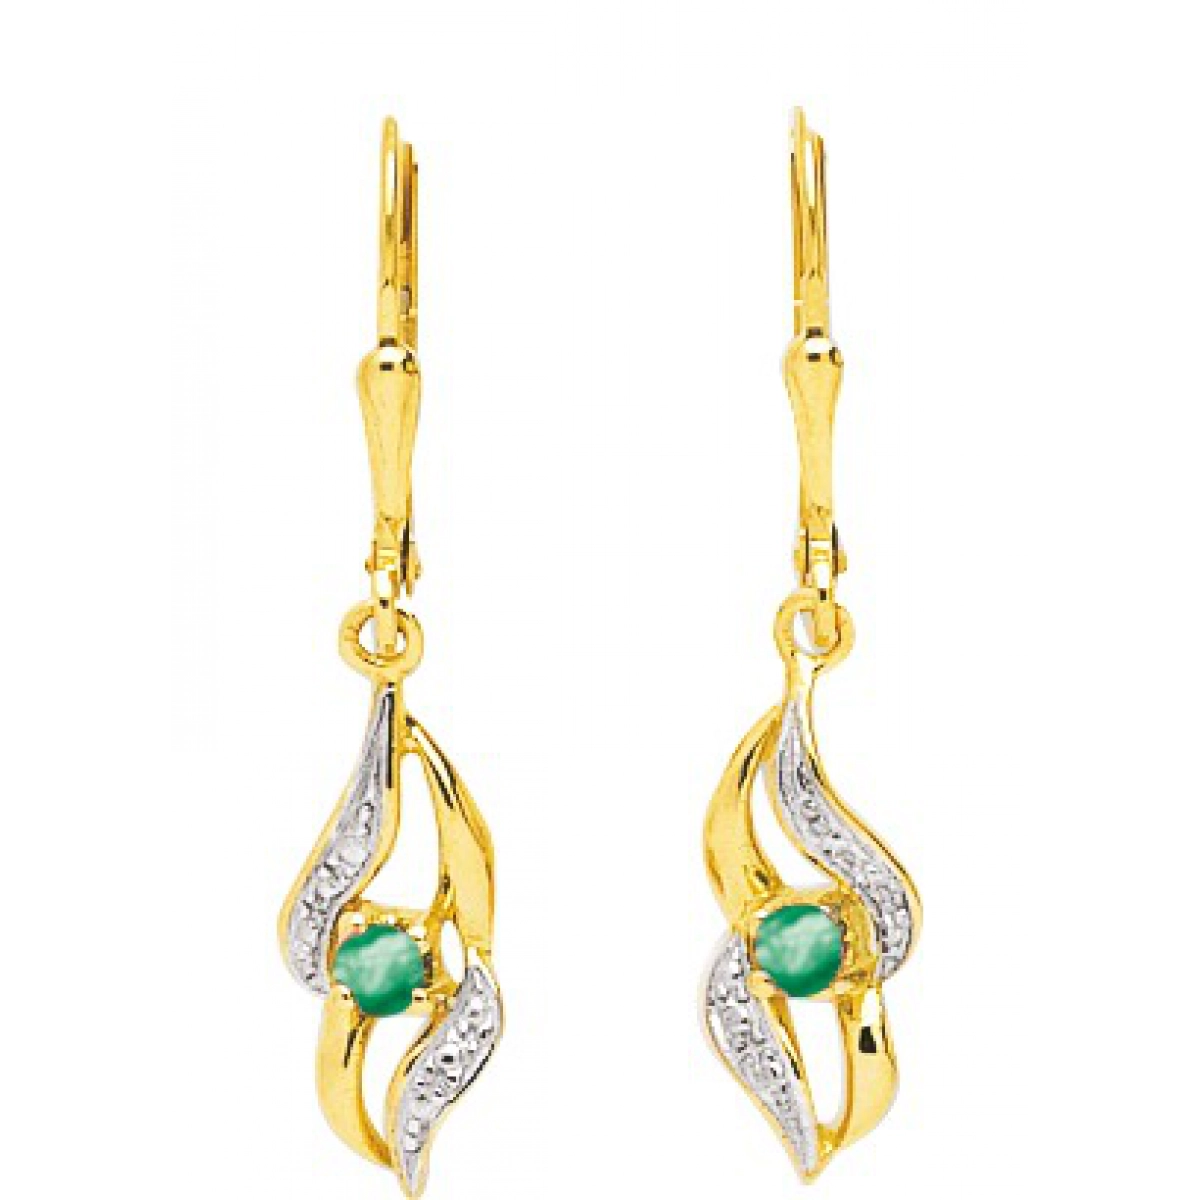 Earrings pair w. emerald and rhod 9K YG  Lua Blanca  293035.E3.0